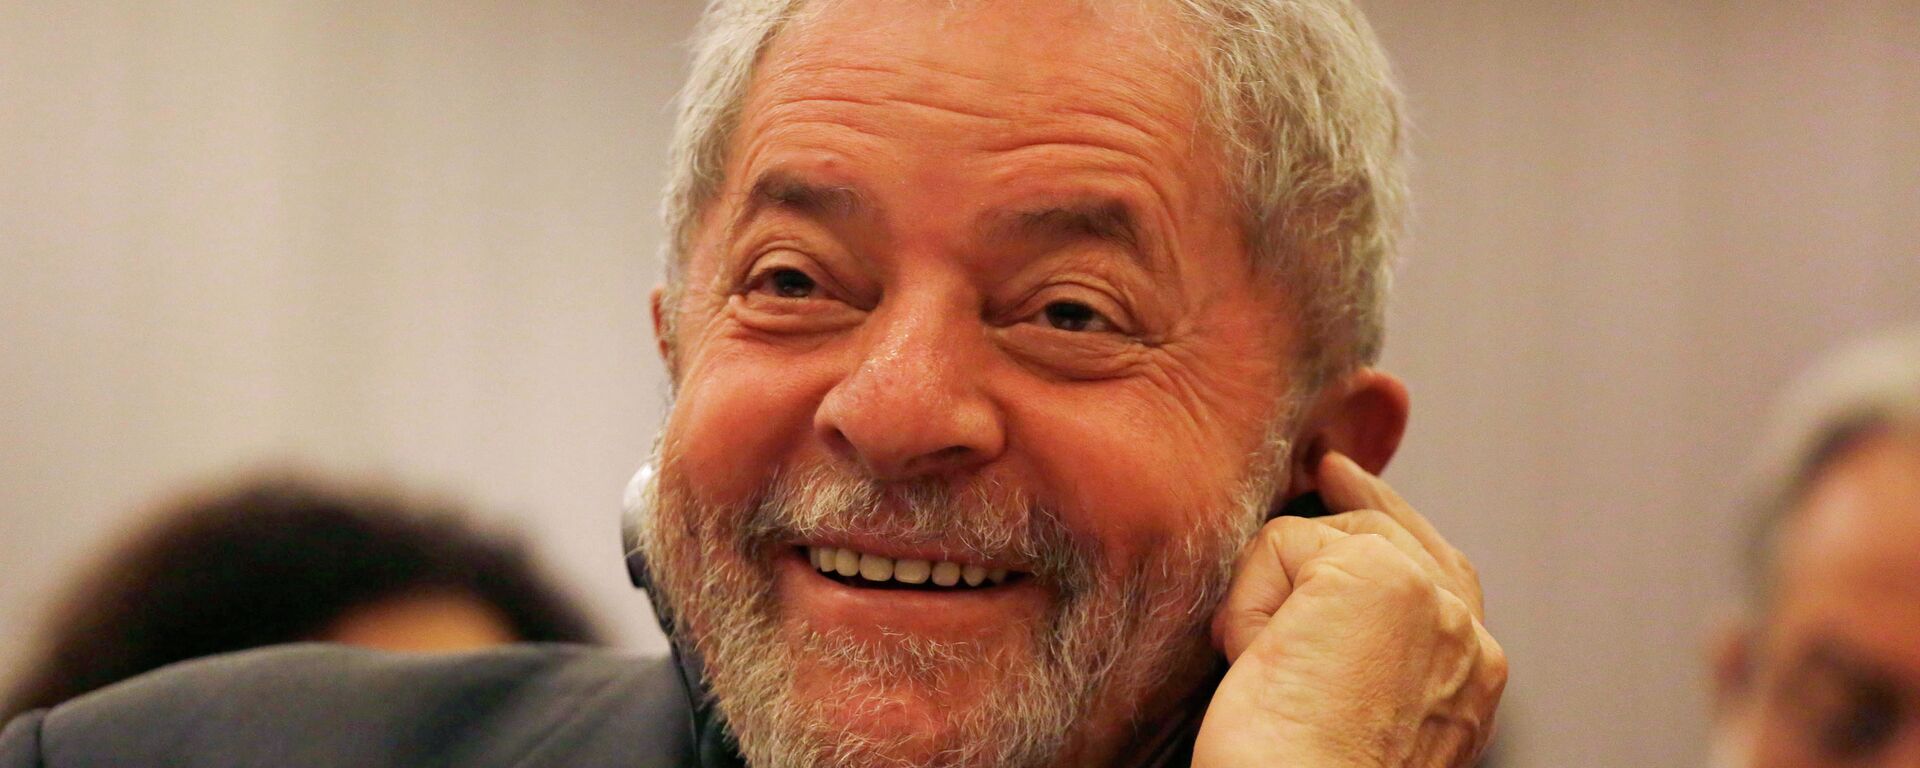 El expresidente de Brasil,  Lula da Silva - Sputnik Mundo, 1920, 09.06.2021